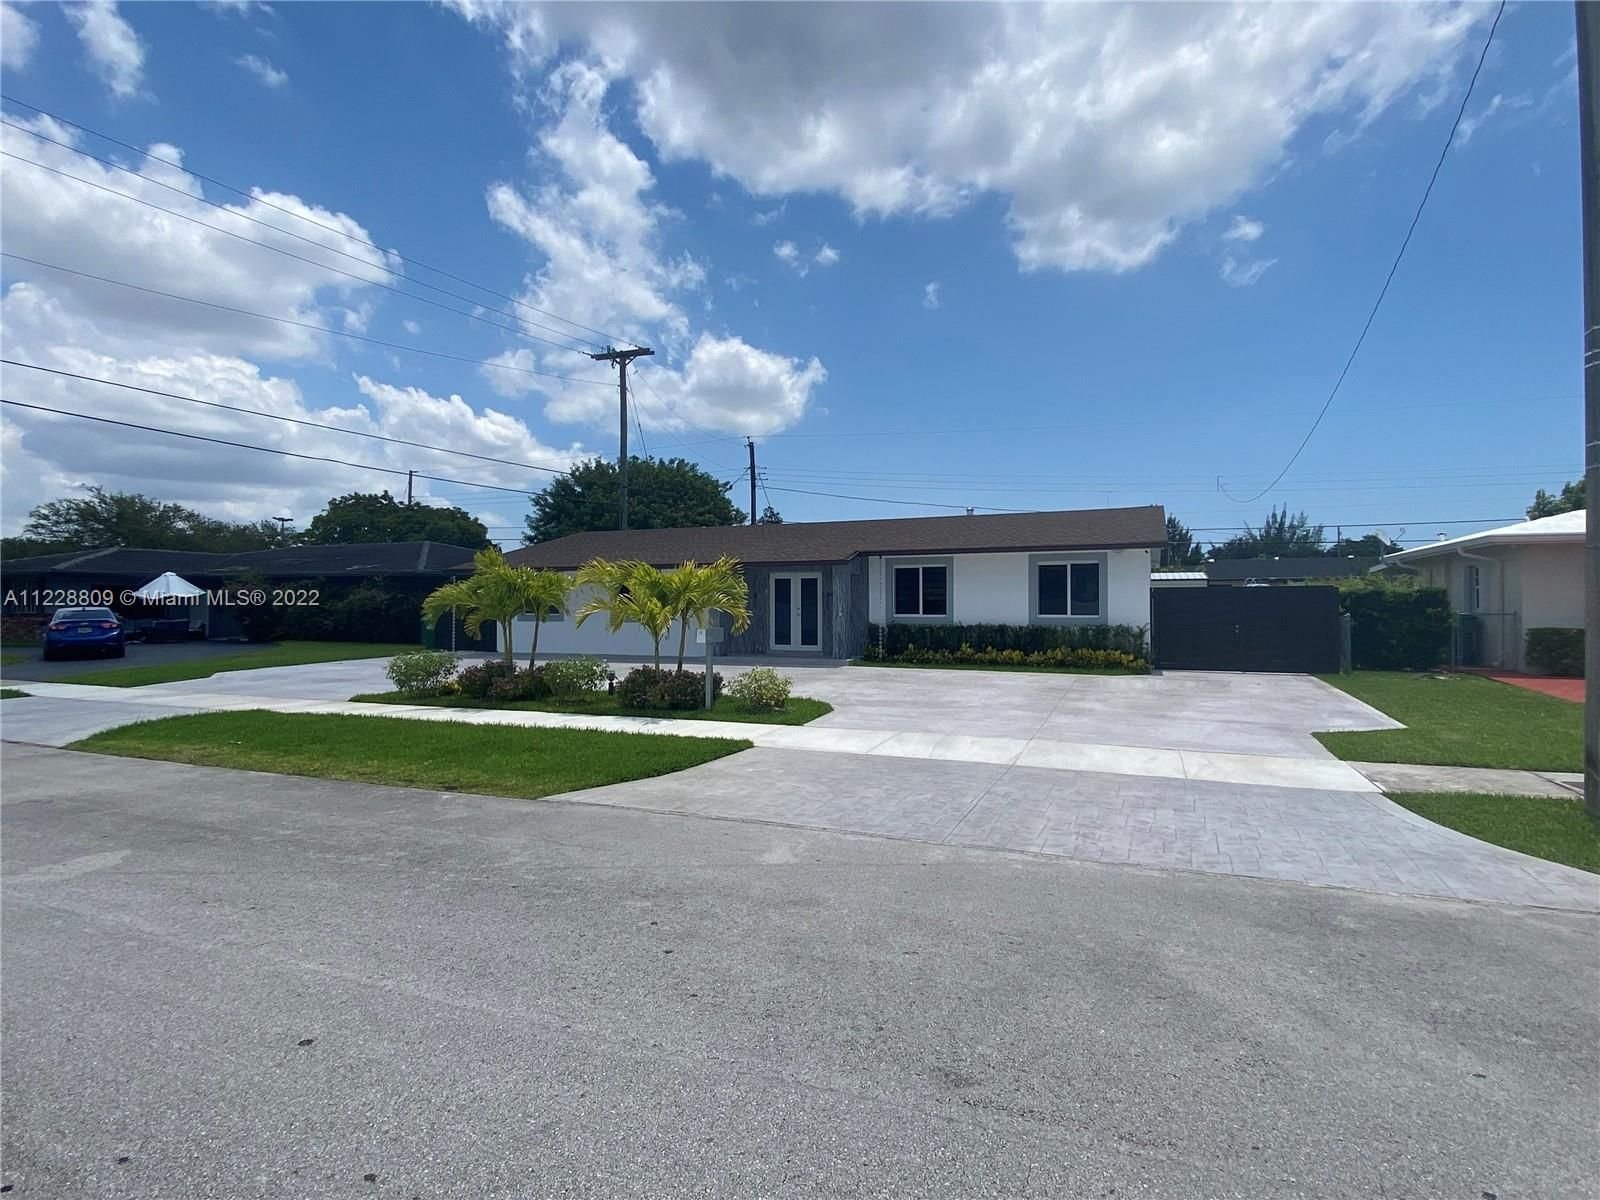 Real estate property located at 4425 89th Pl, Miami-Dade County, Miami, FL